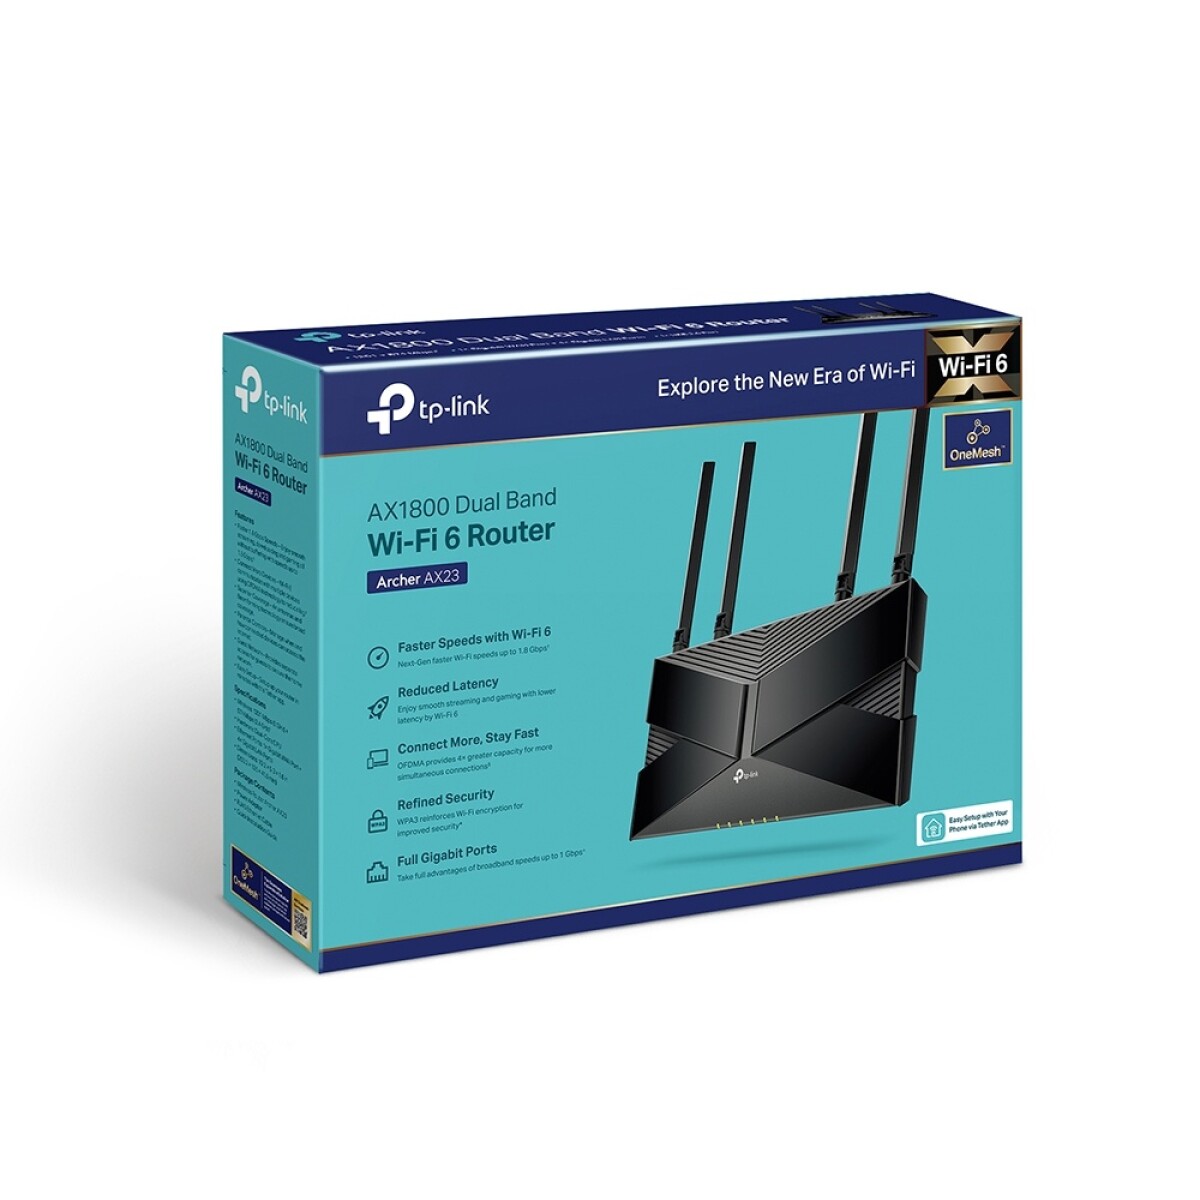 Router Tp-link Archer AX23 Dual Band AX1800 Gigabit Wi-fi 6 - 001 